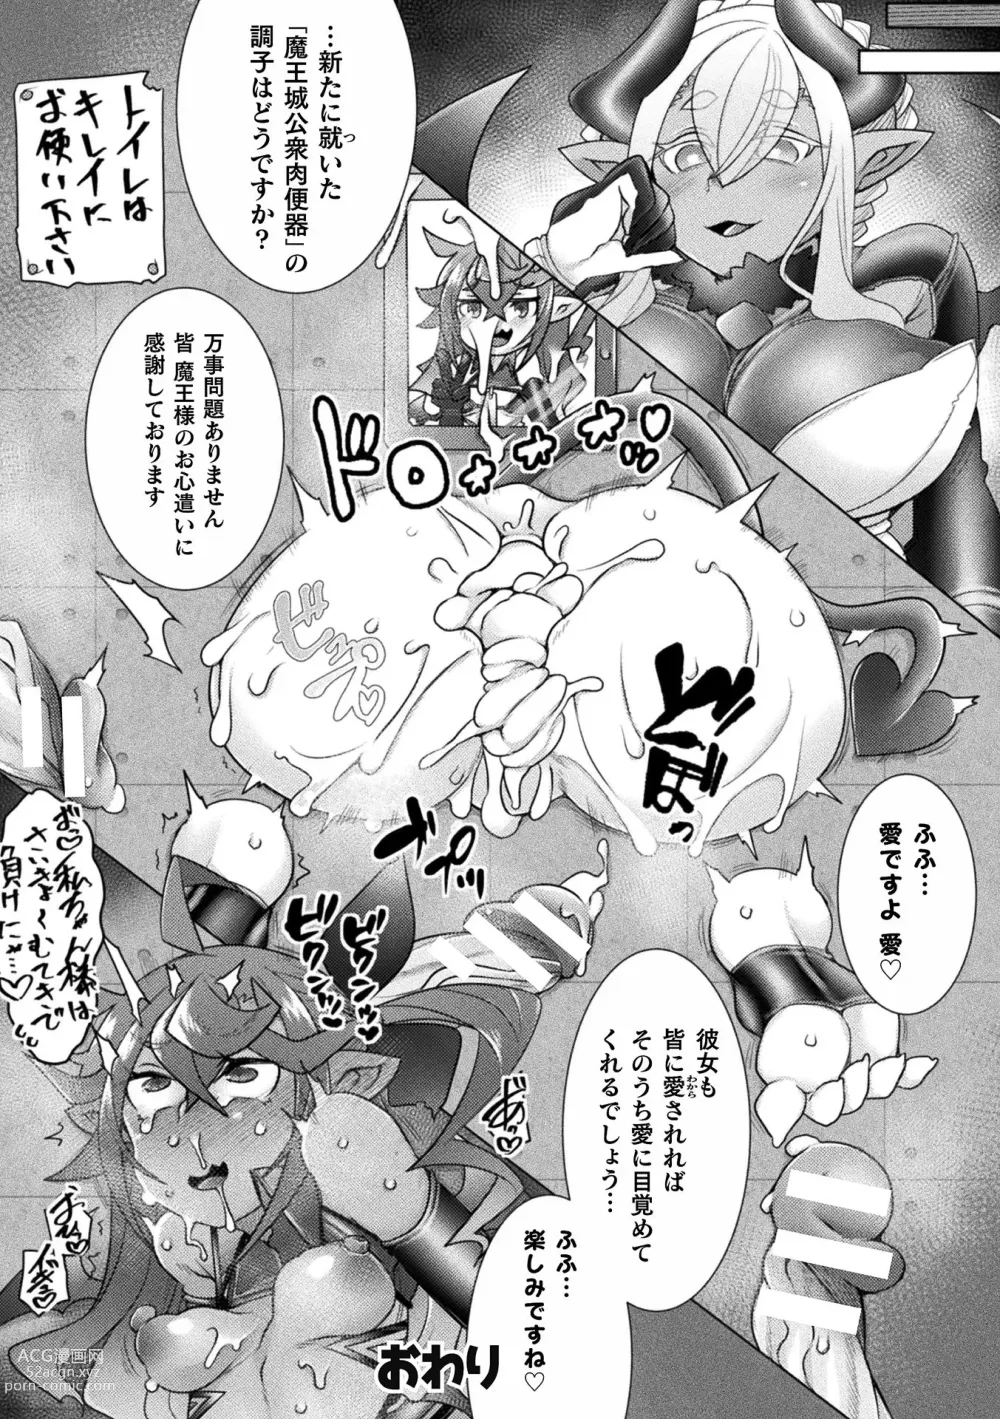 Page 122 of manga Kukkoro Heroines Vol. 28